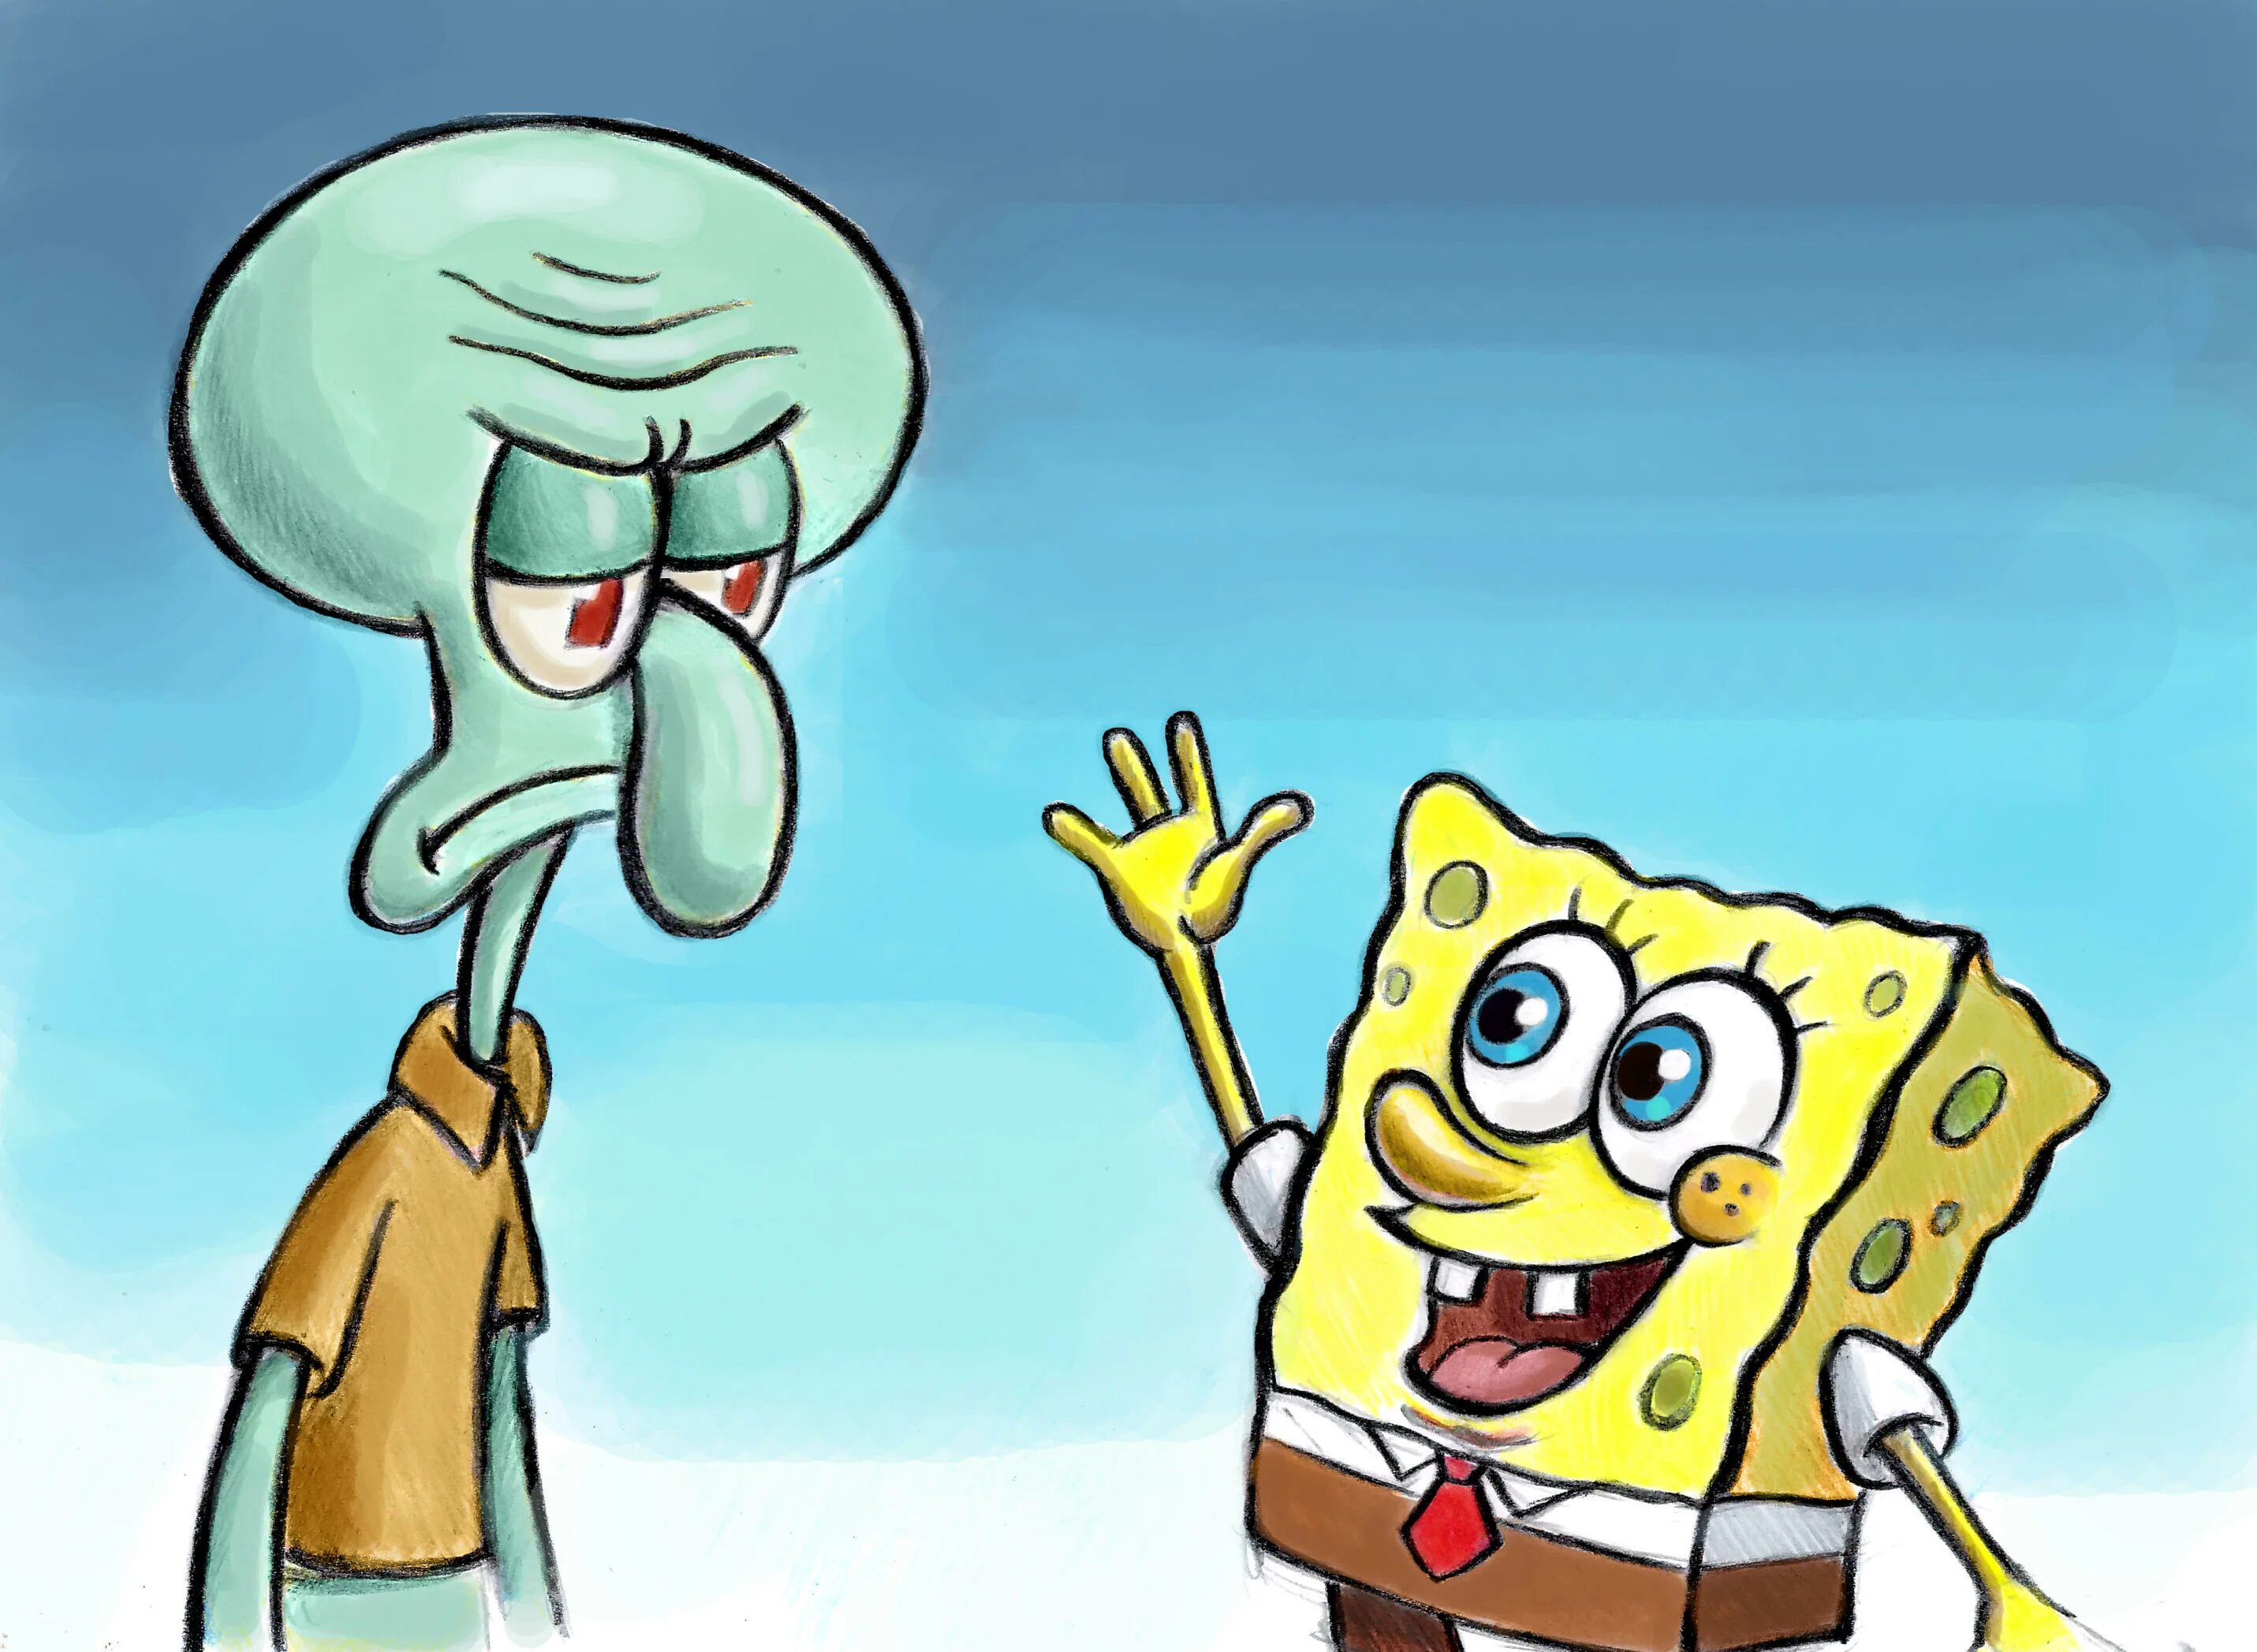 Spongebob squidward. Сквидвард. Губка Боб и Сквидвард. СПАНЧБОБ И скидвардъ. Губка Боб квадратные штаны Сквидвард.